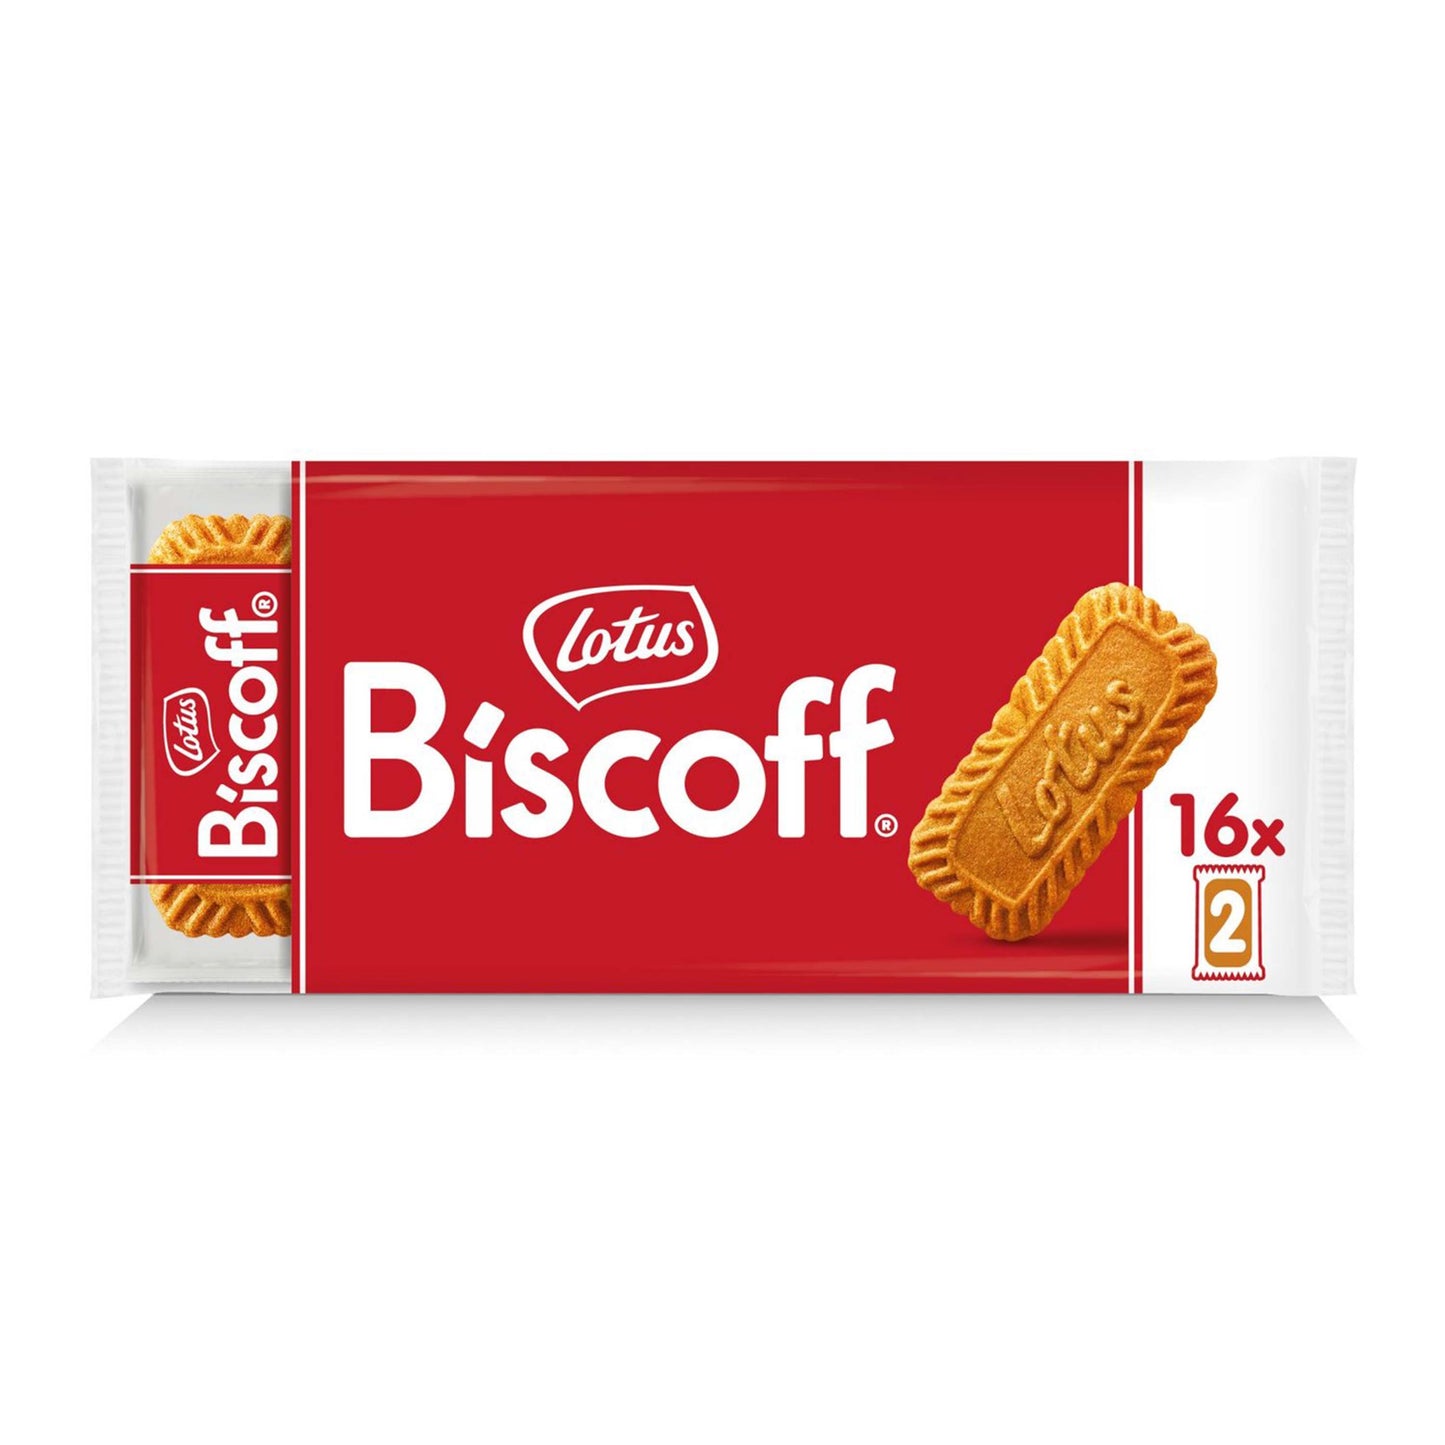 Lotus Biscoff Snack Pack - 16 PACK - BRITISH SNACKS